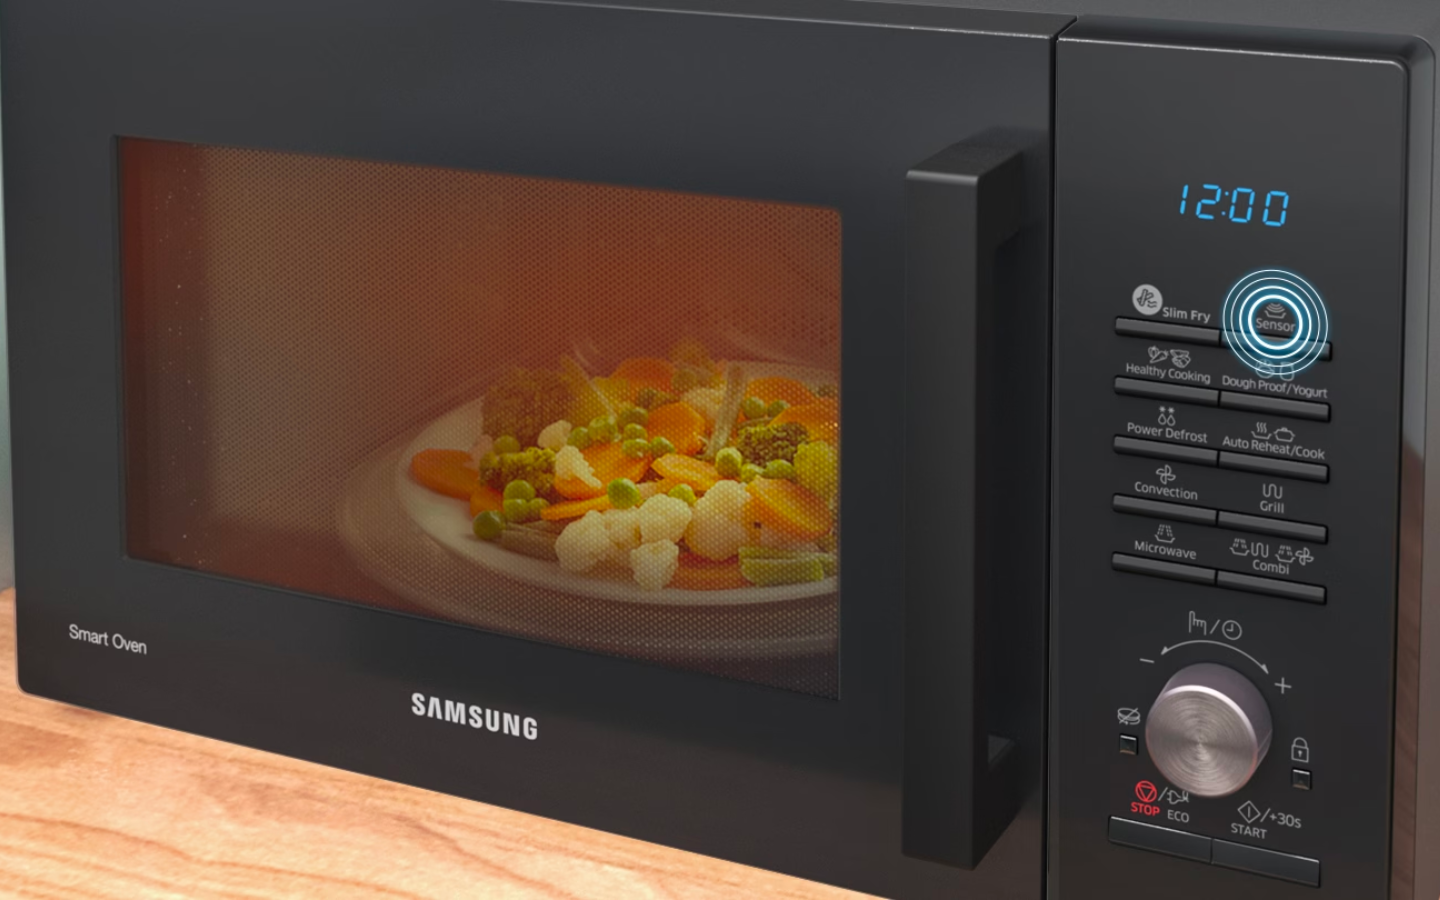 Samsung 28 Liters SlimFry™ Moisture Sensor Convection Microwave Oven (Black, MC28A5145VK) Sensor Cook